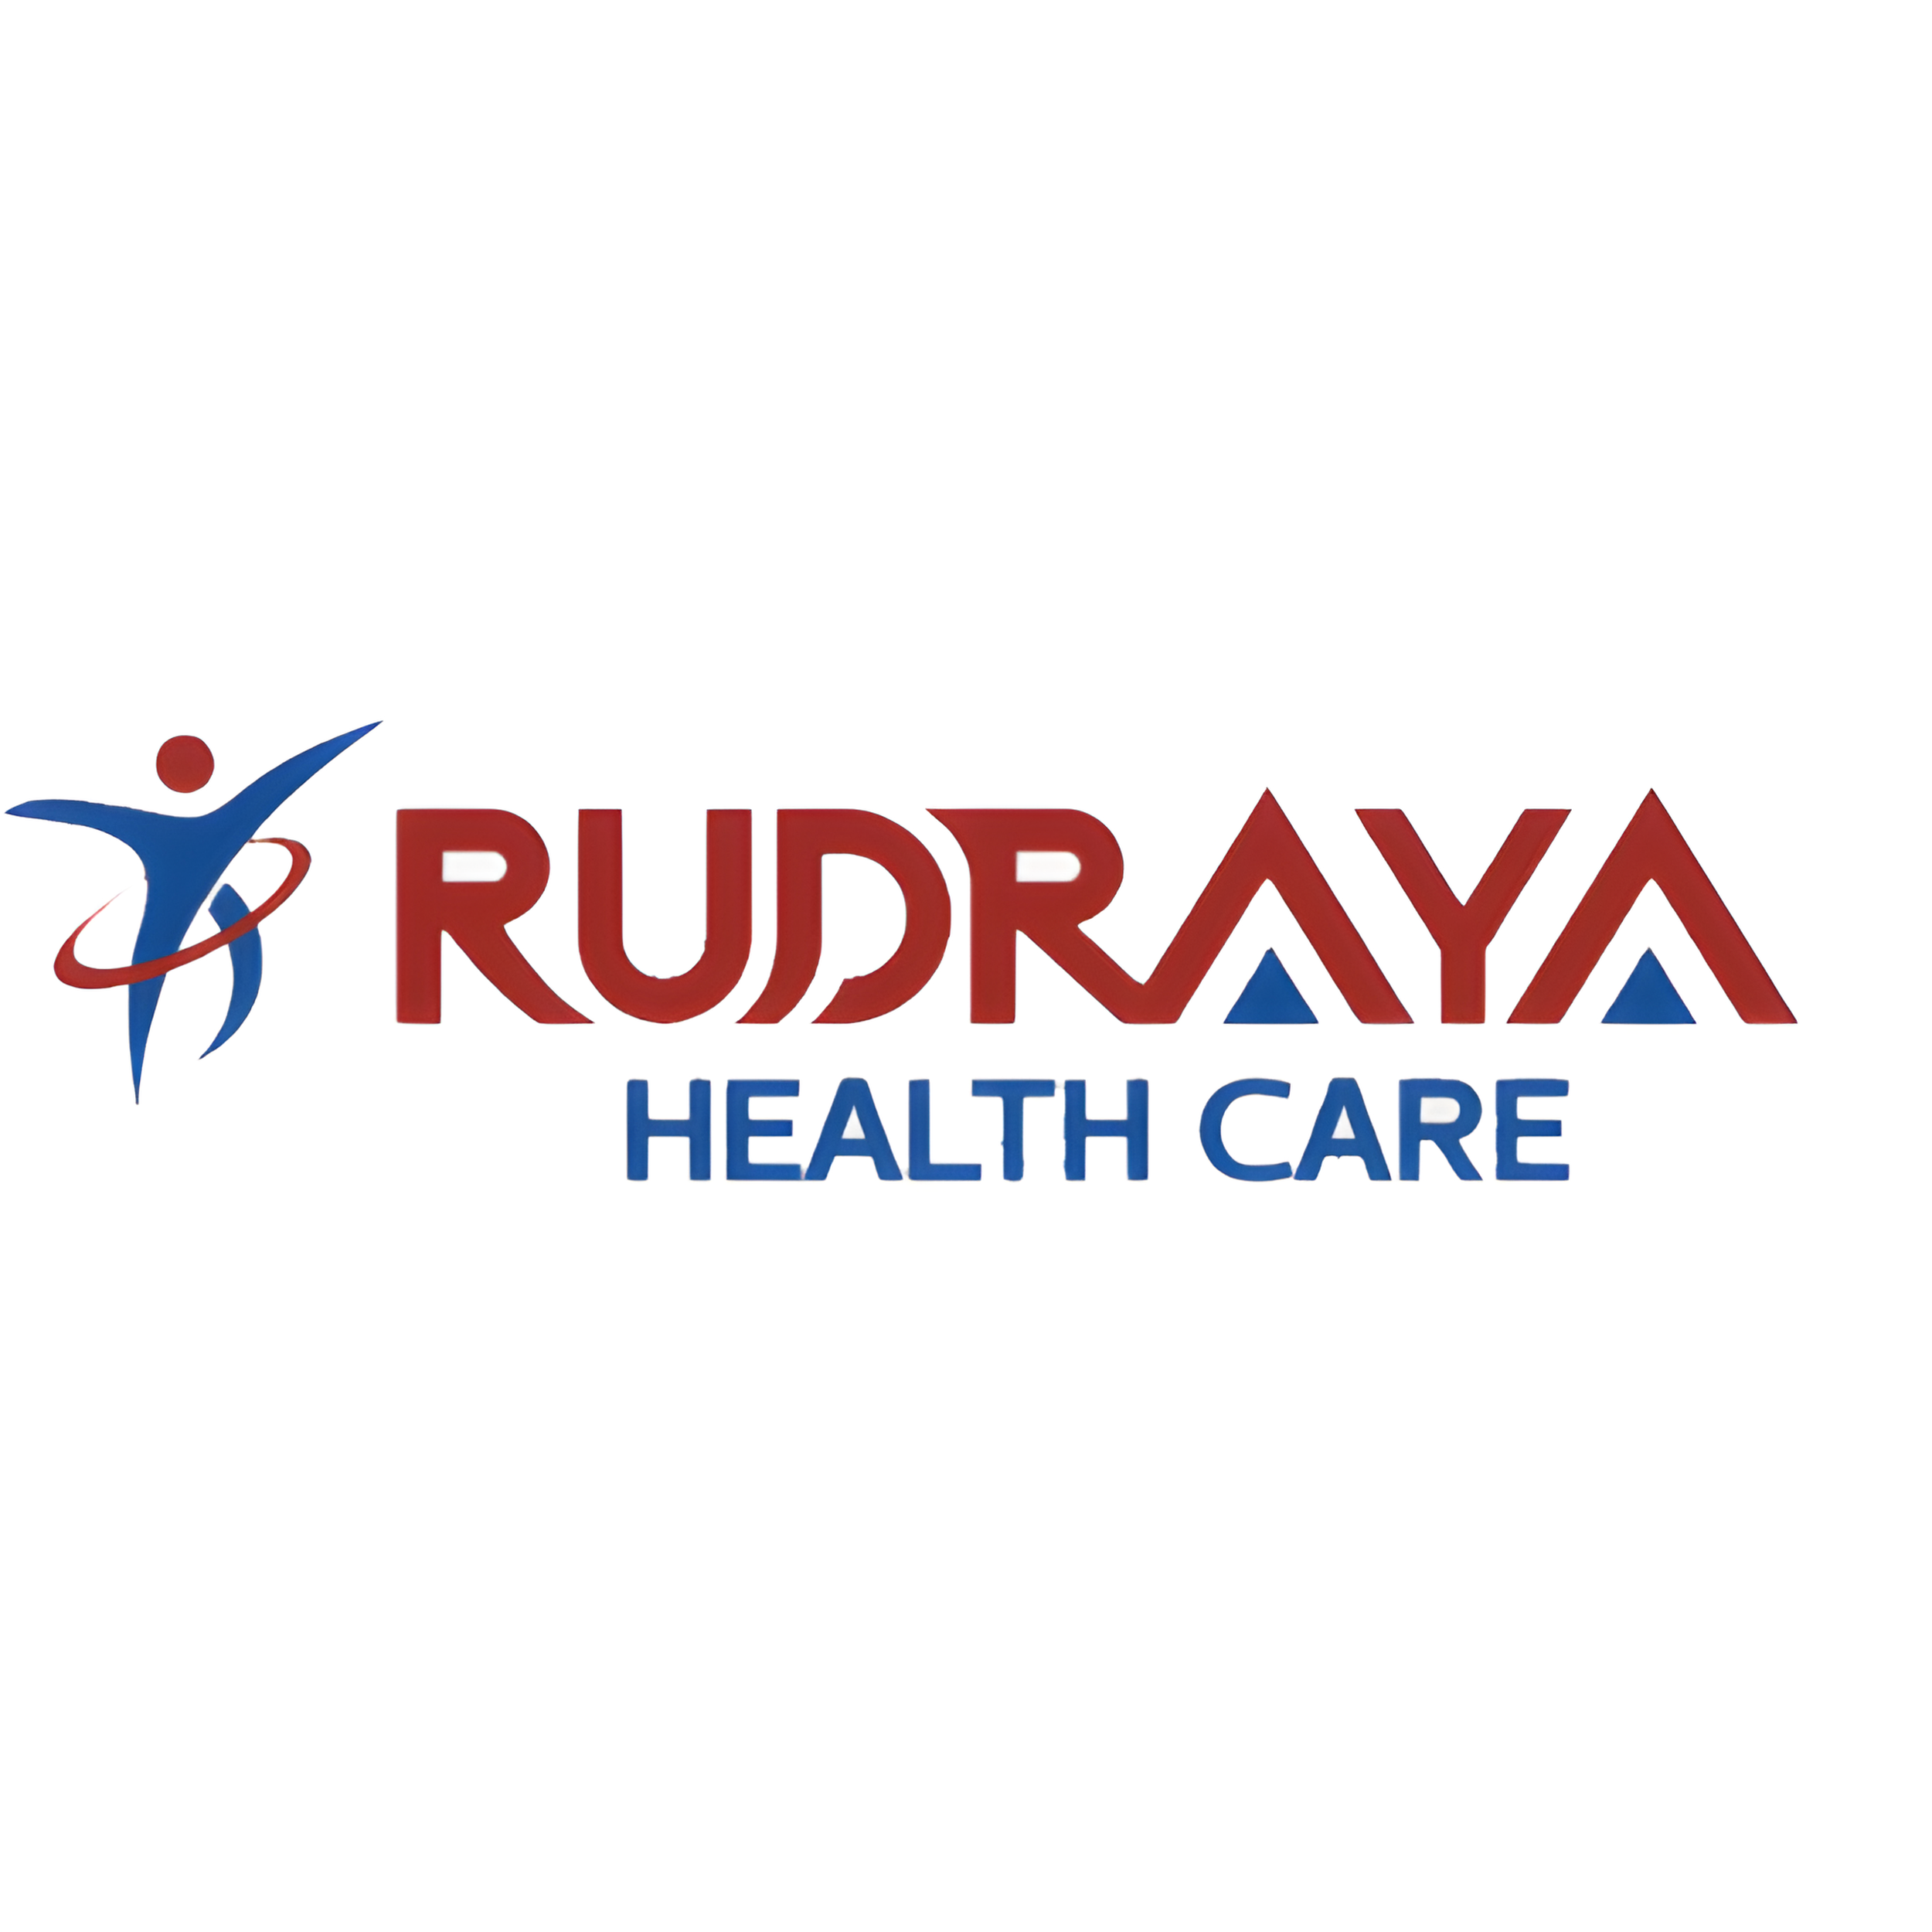 RUDRAYA HEALTH CARE